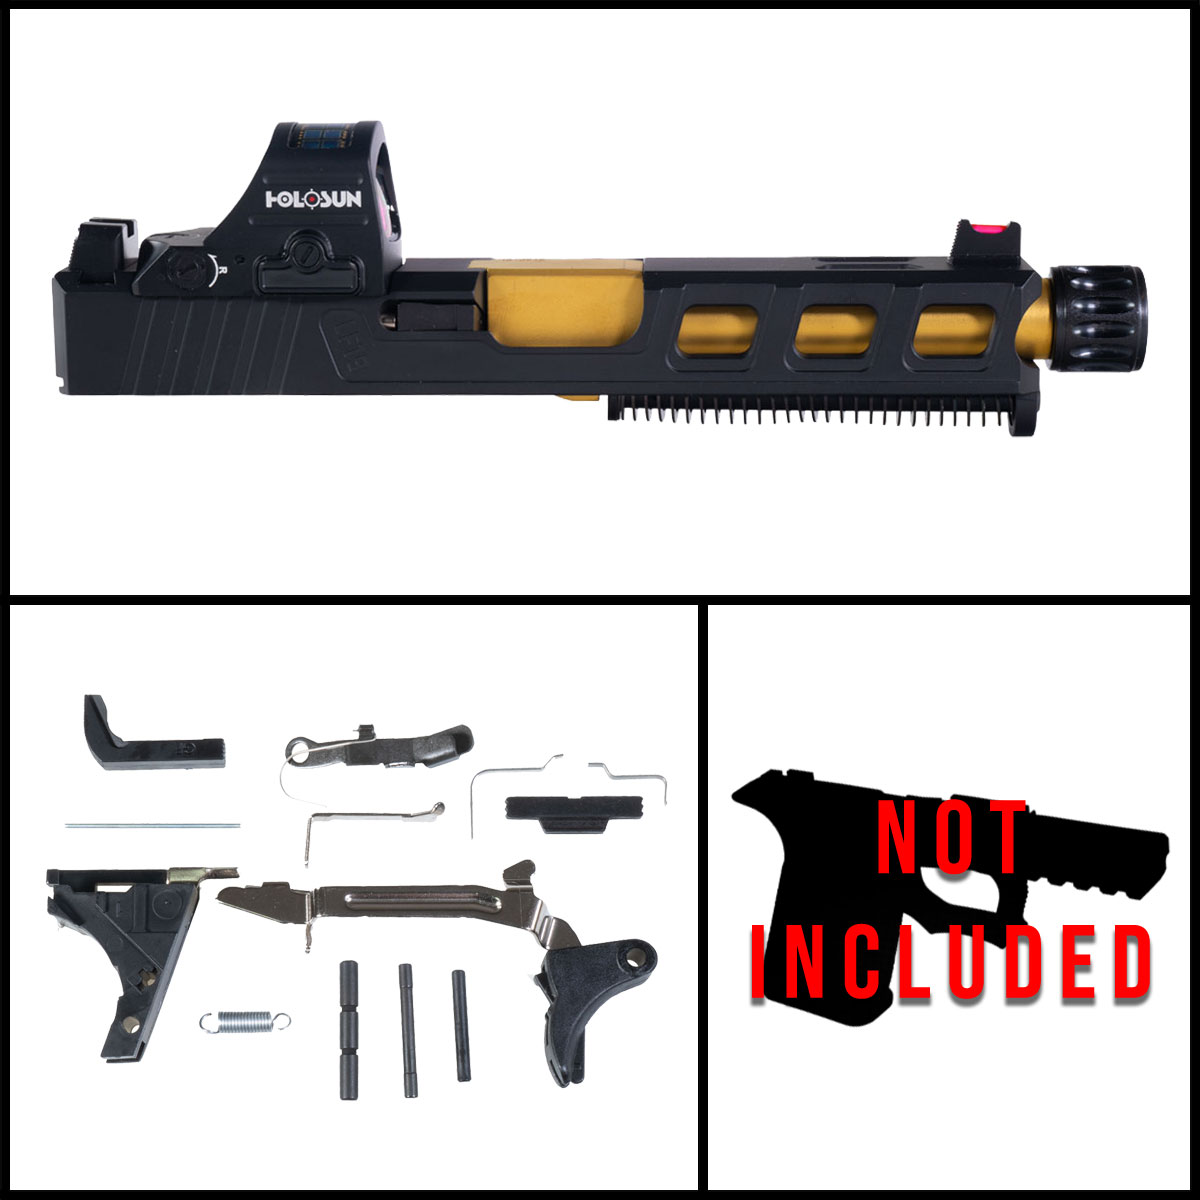 OTD 'Cui Bono? w/ HS507C-X2 Red Dot' 9mm Full Pistol Build Kit (Everything Minus Frame) - Glock 19 Gen 1-3 Compatible